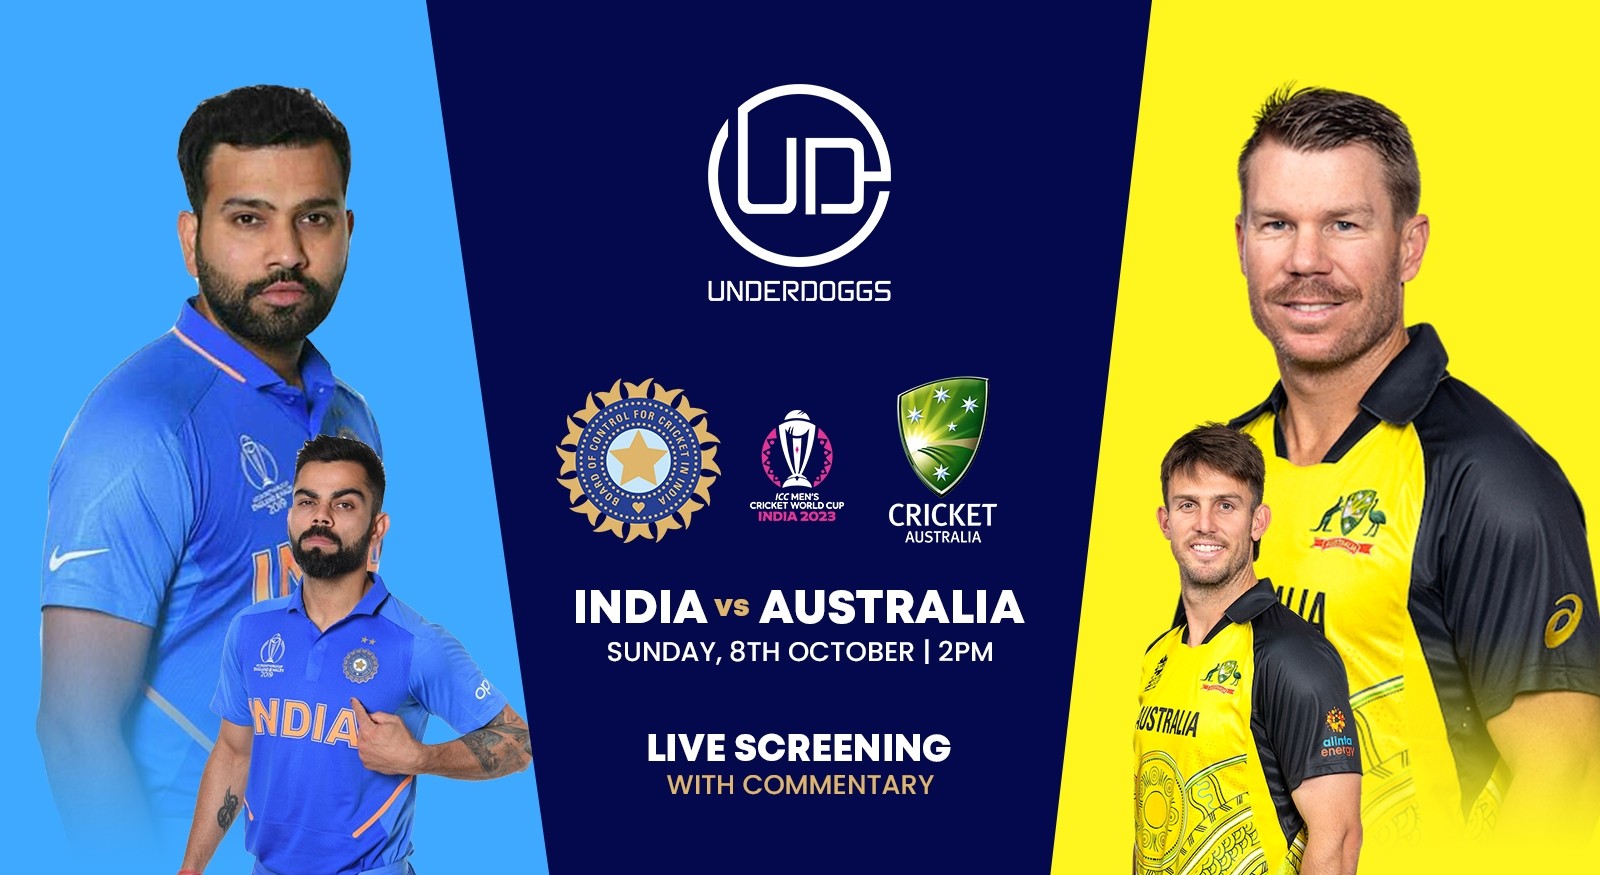 India vs Australia (World cup) Live screening